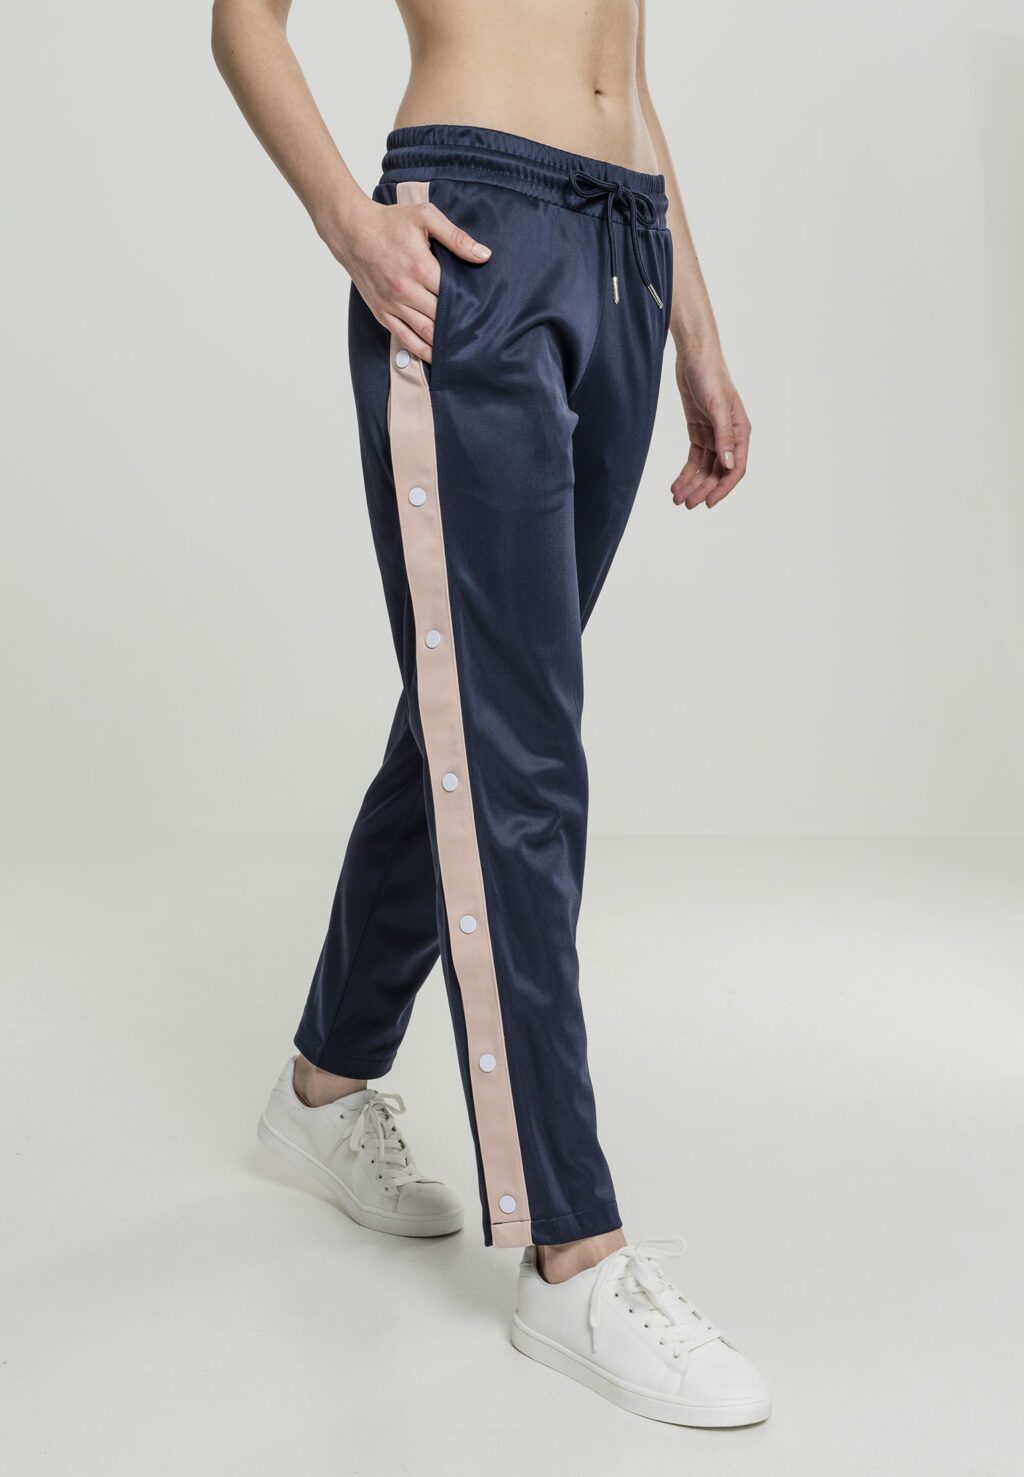 Urban Classics Ladies Button Up Track Pants navy/lightrose/white TB1995